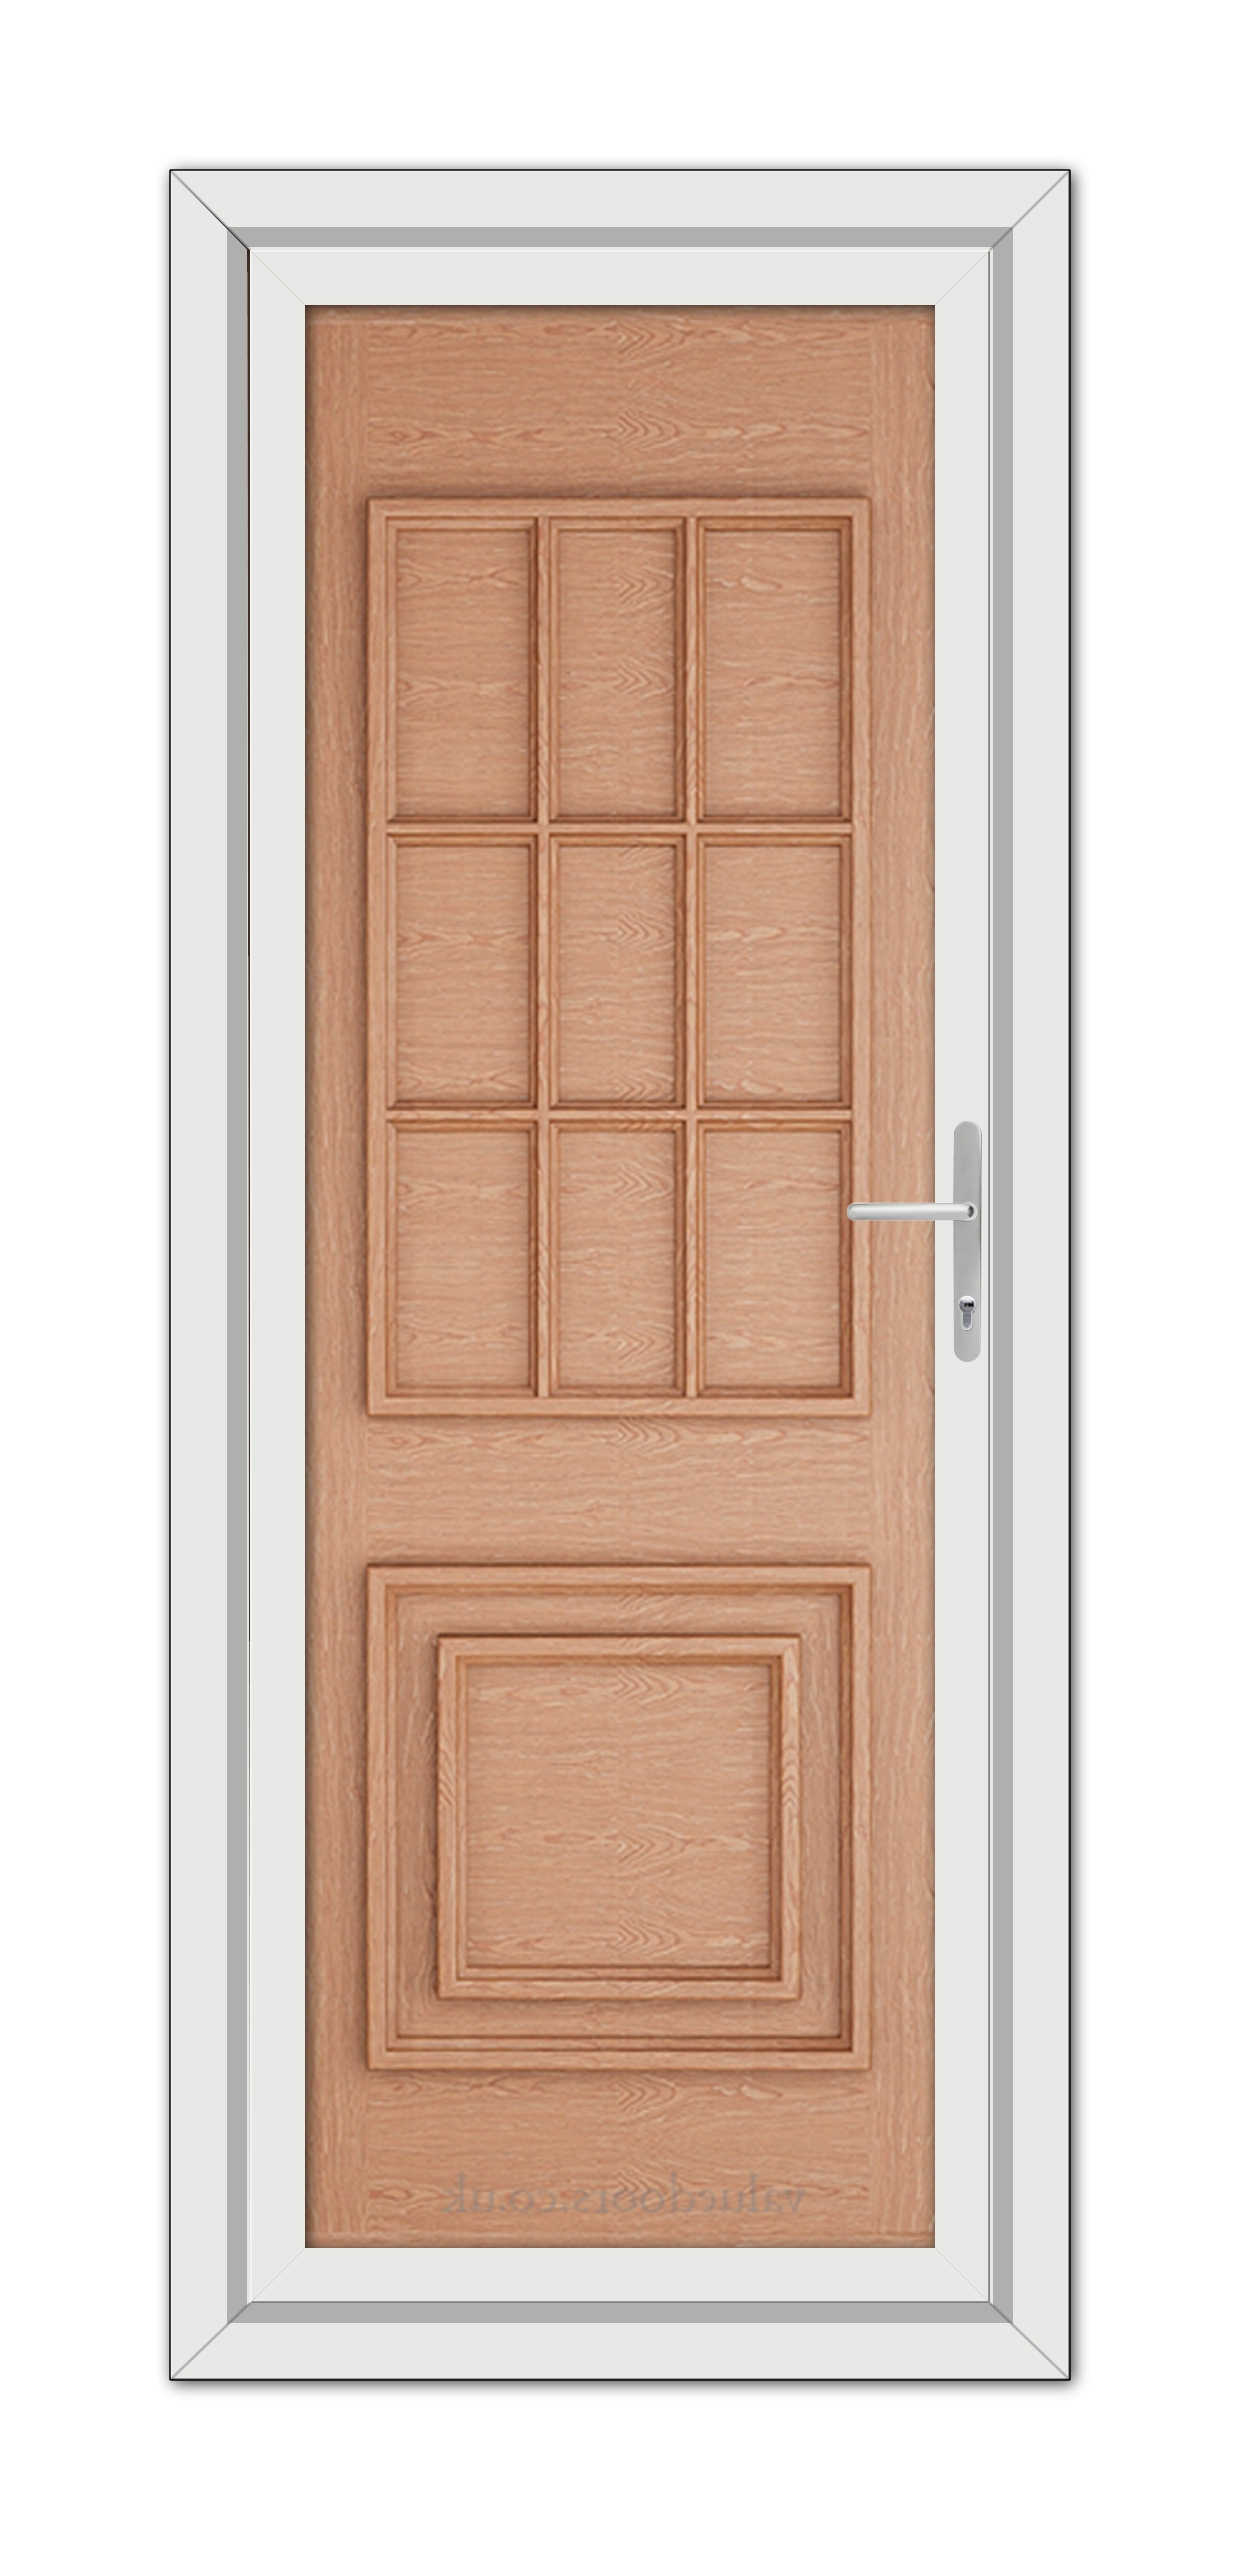 A close-up of an Irish Oak Cambridge One Solid uPVC Door.